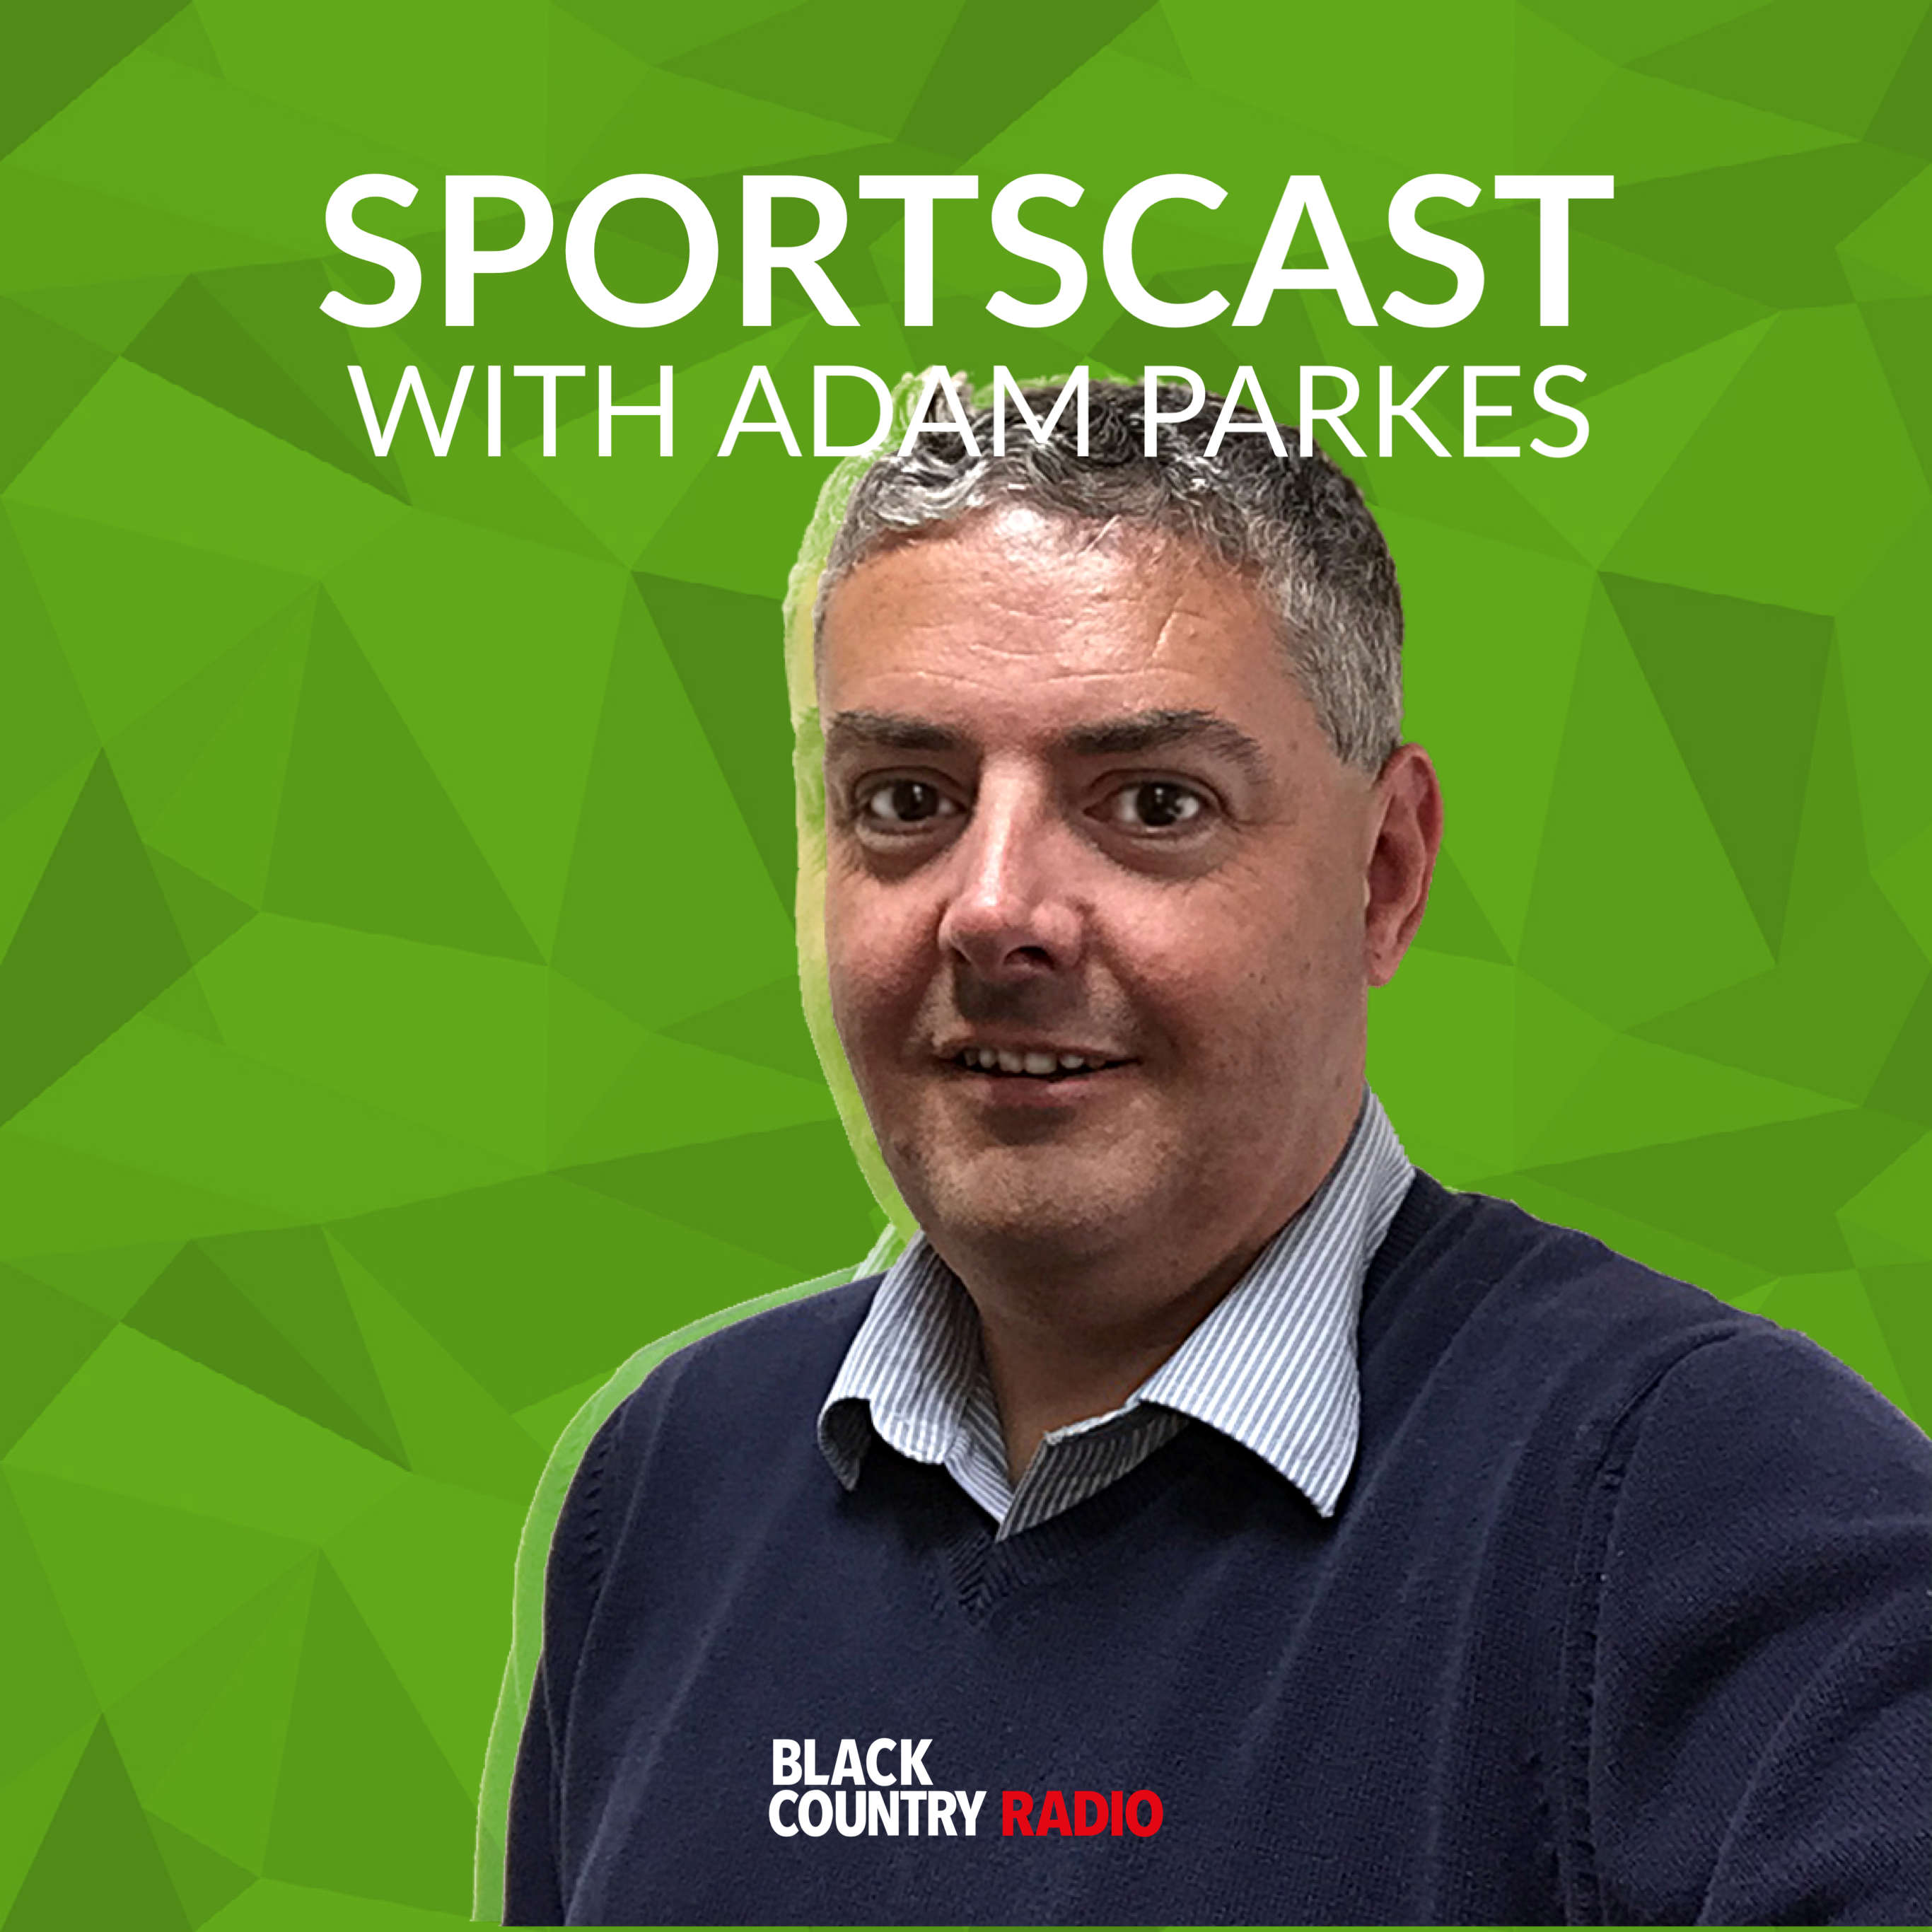 Sportscast with Adam Parkes